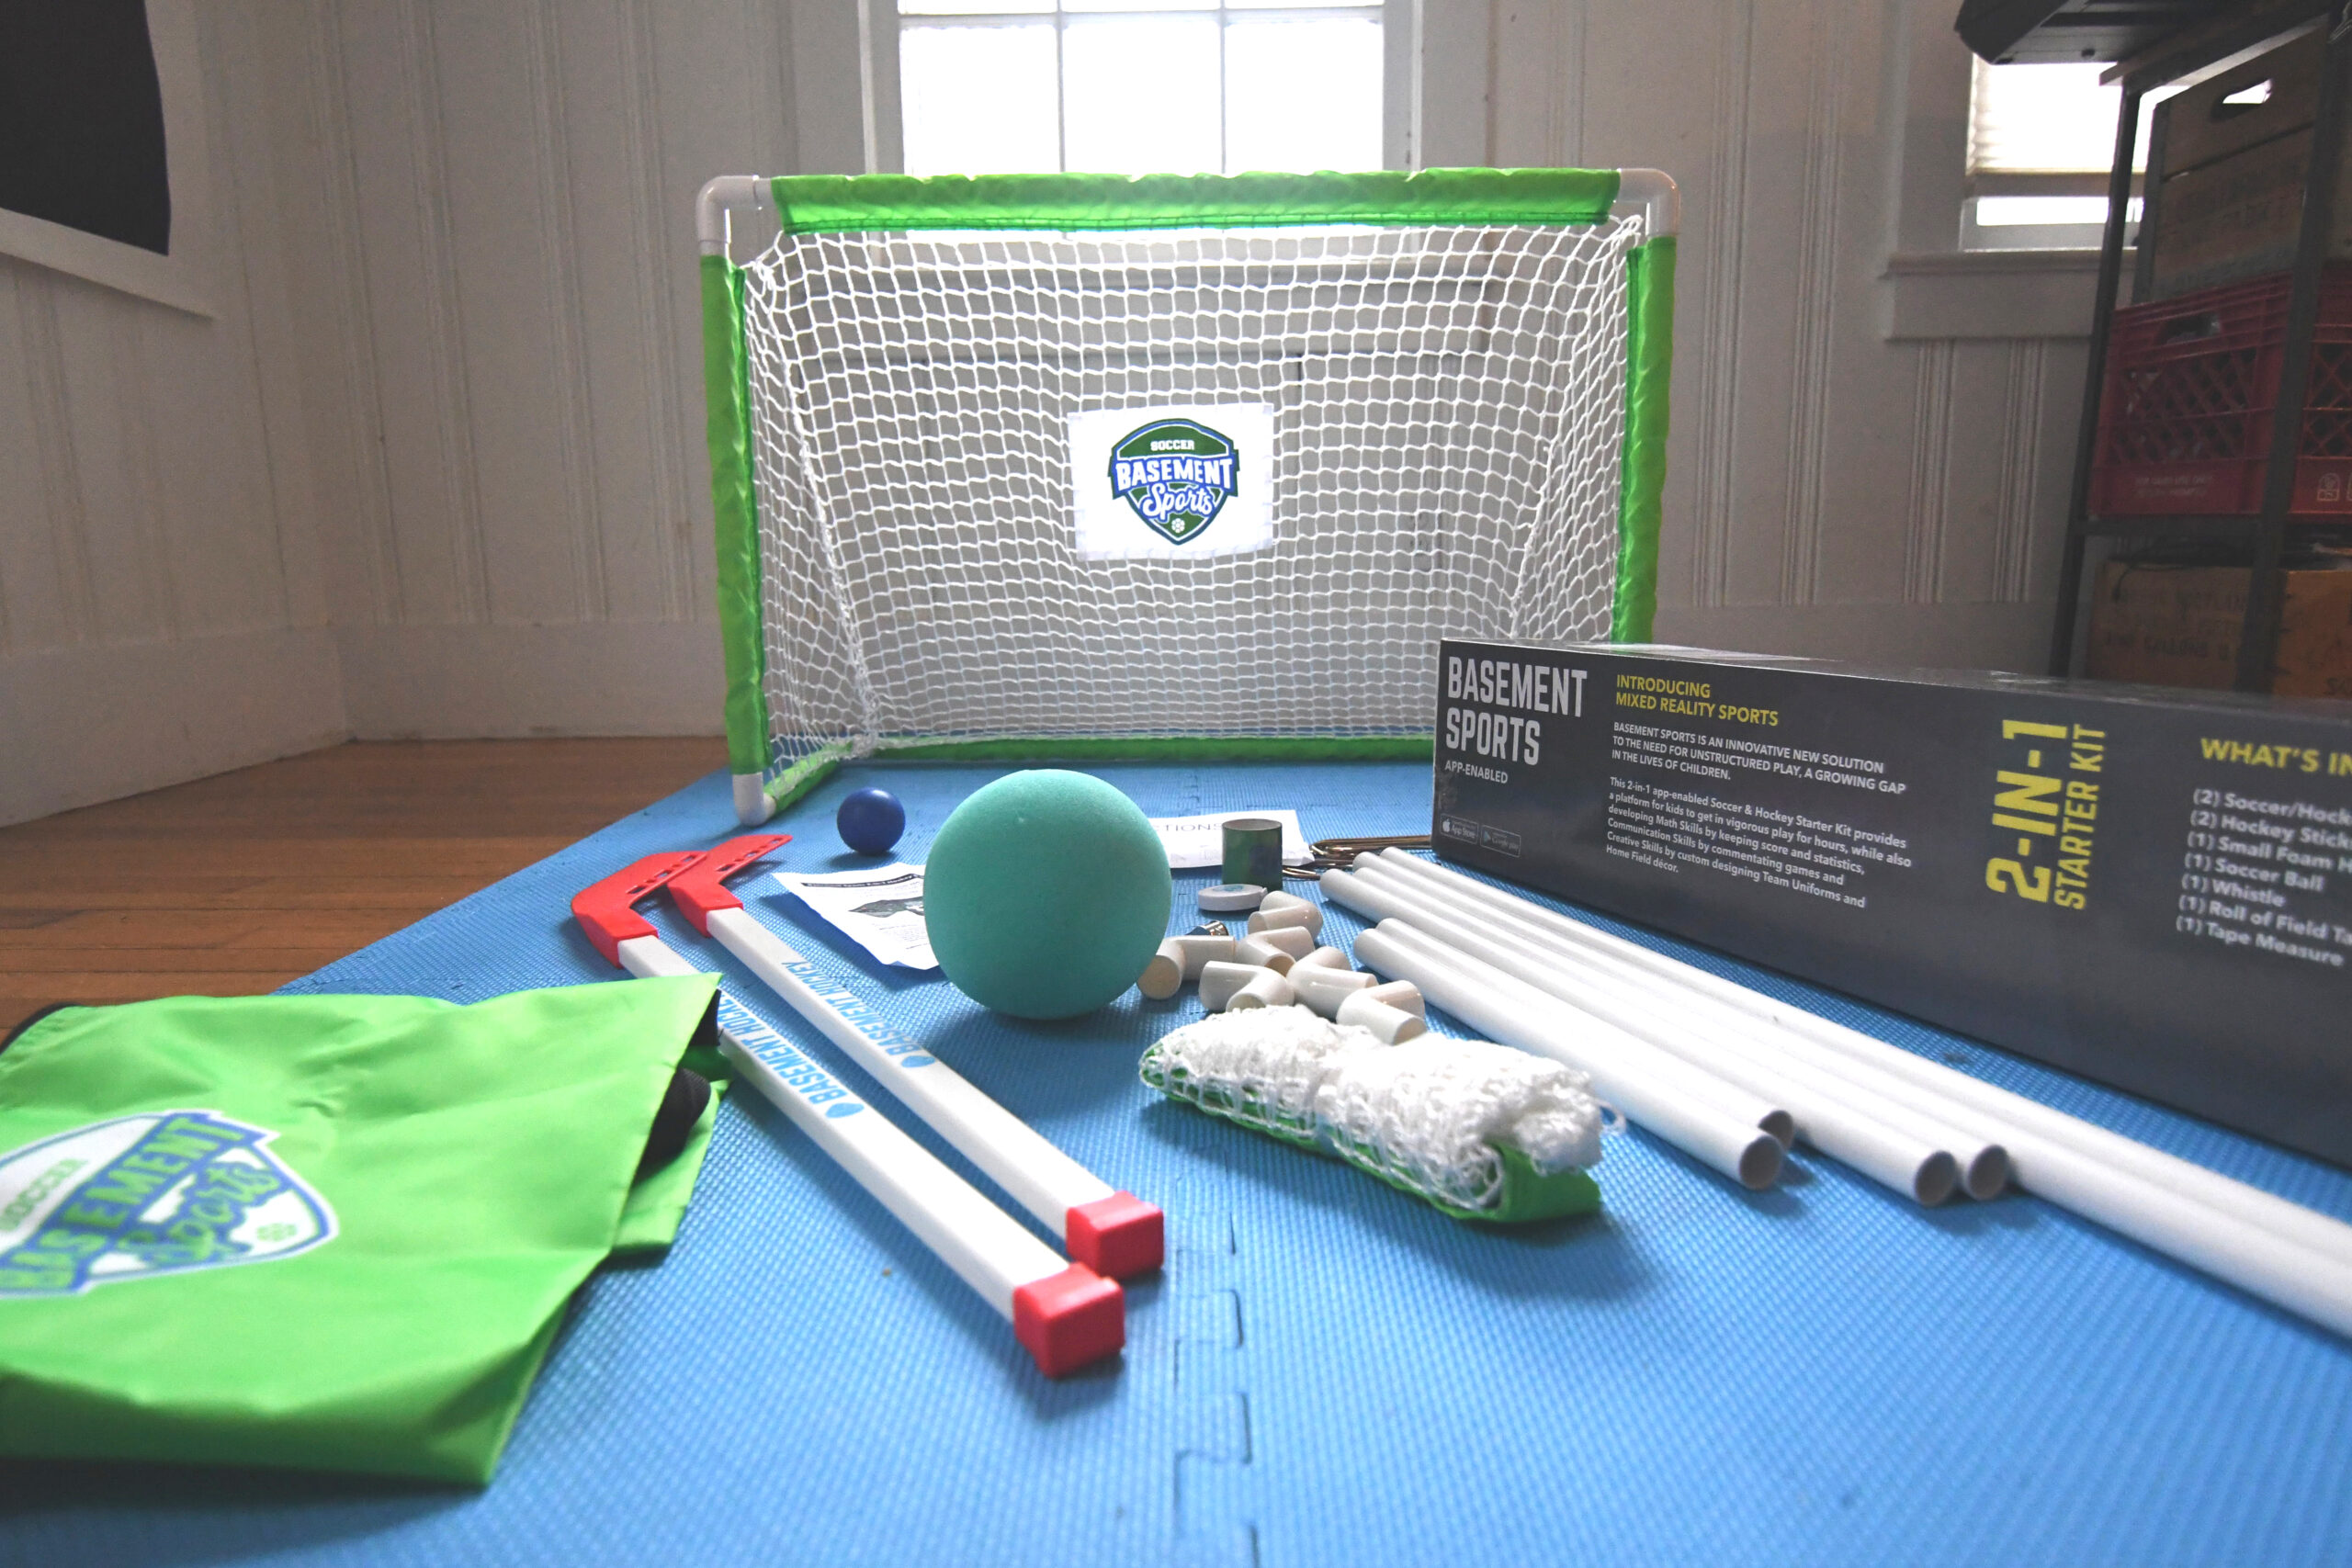 Basement Sports Soccer and Hockey Kit